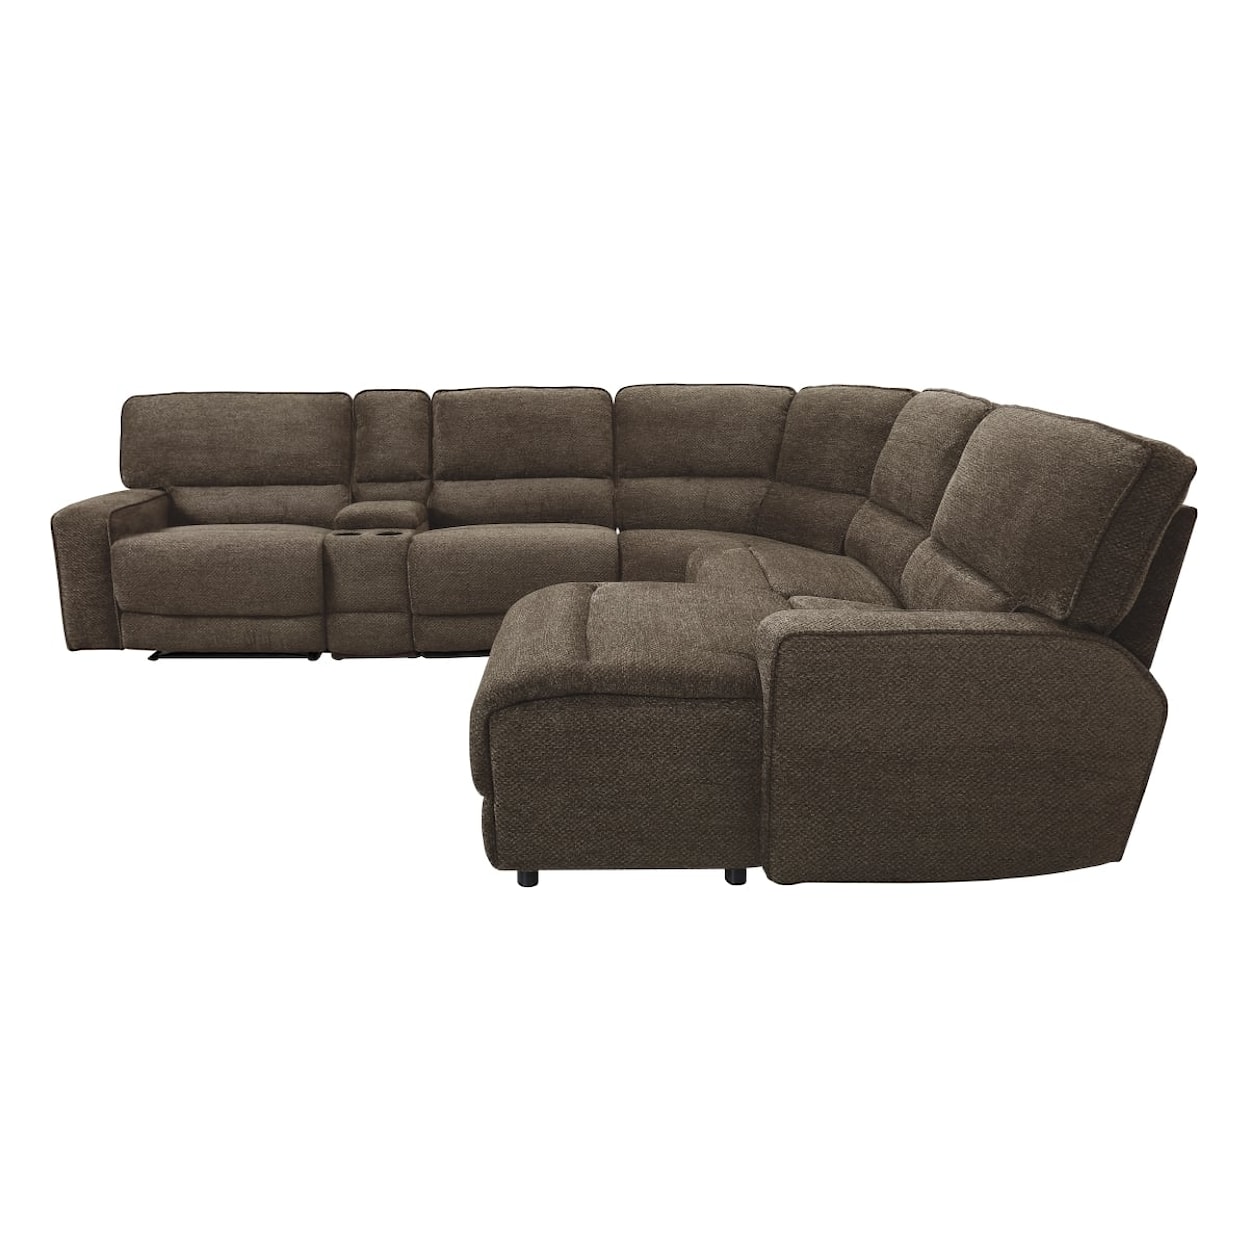 Homelegance Shreveport 6-Piece Modular Reclining Sectional Sofa